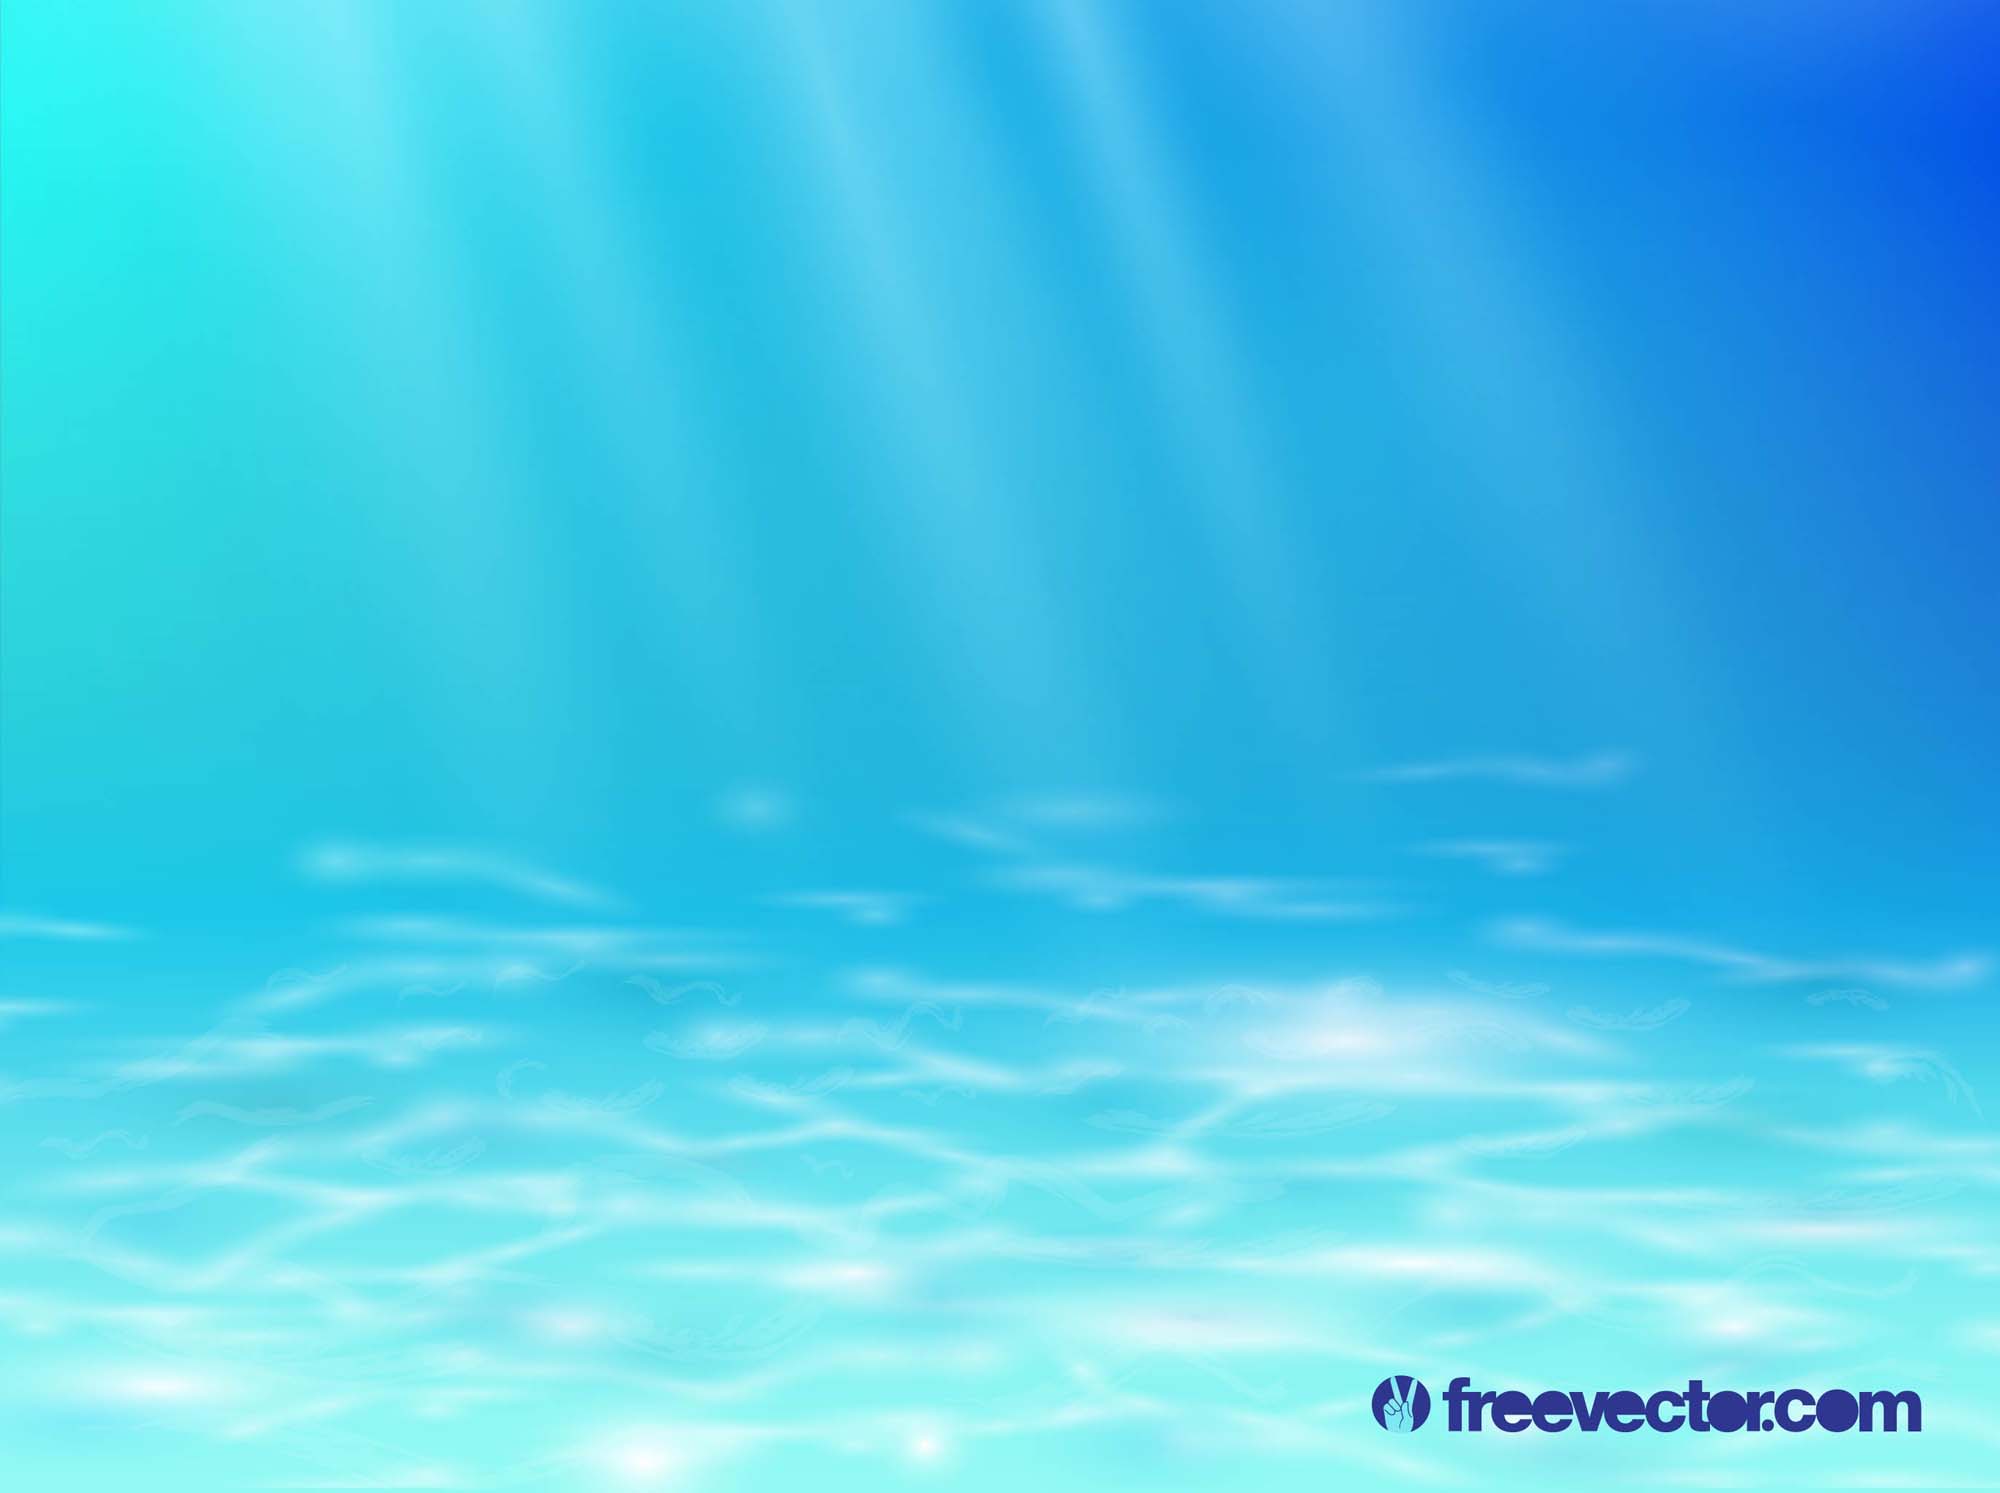 Realistic Underwater Illustration